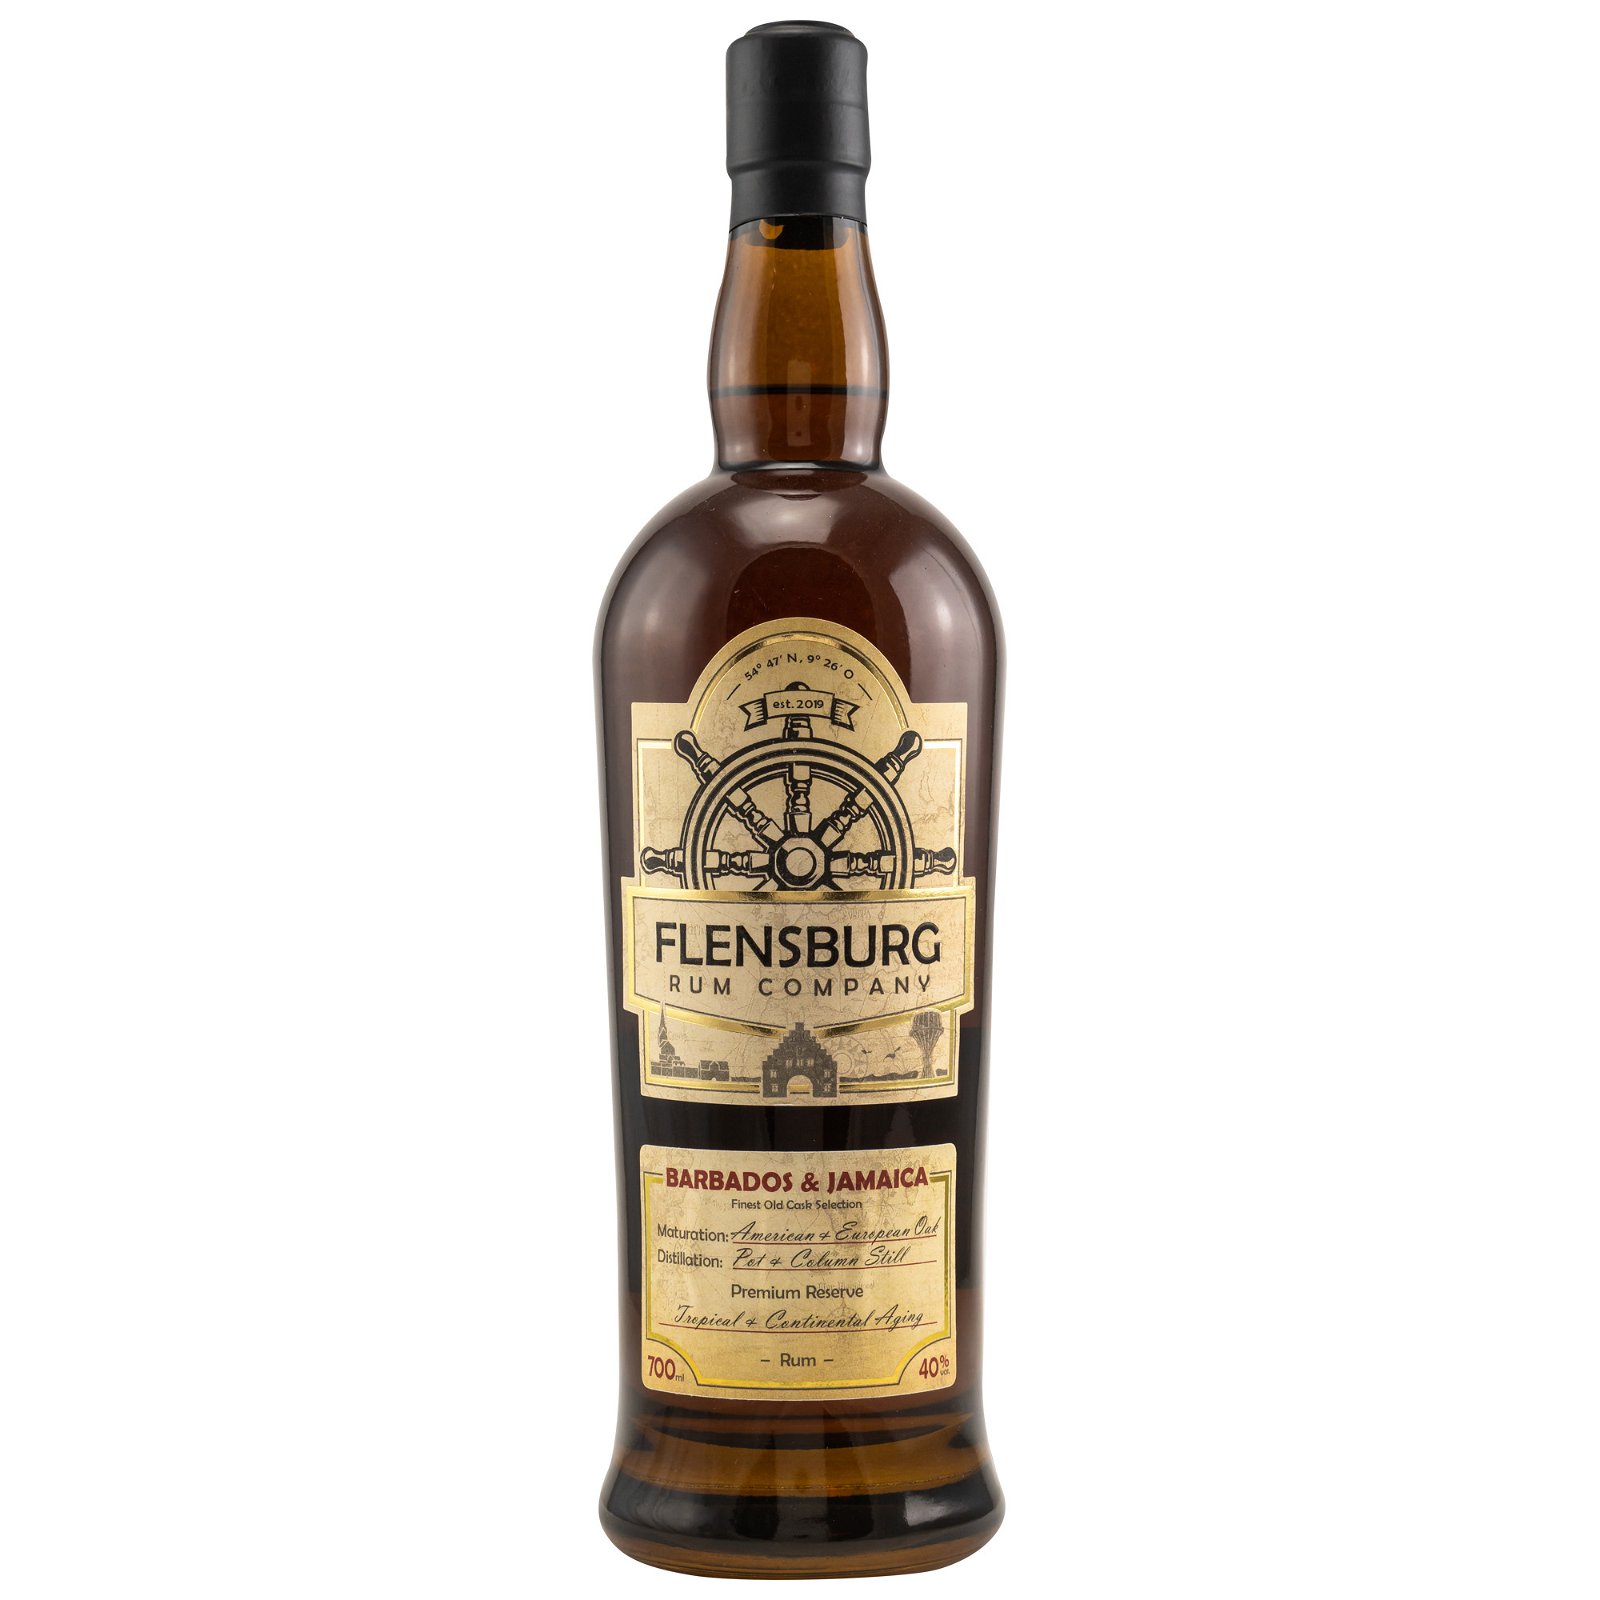 Flensburg Rum Company Barbados & Jamaica Premium Reserve American and European Oak